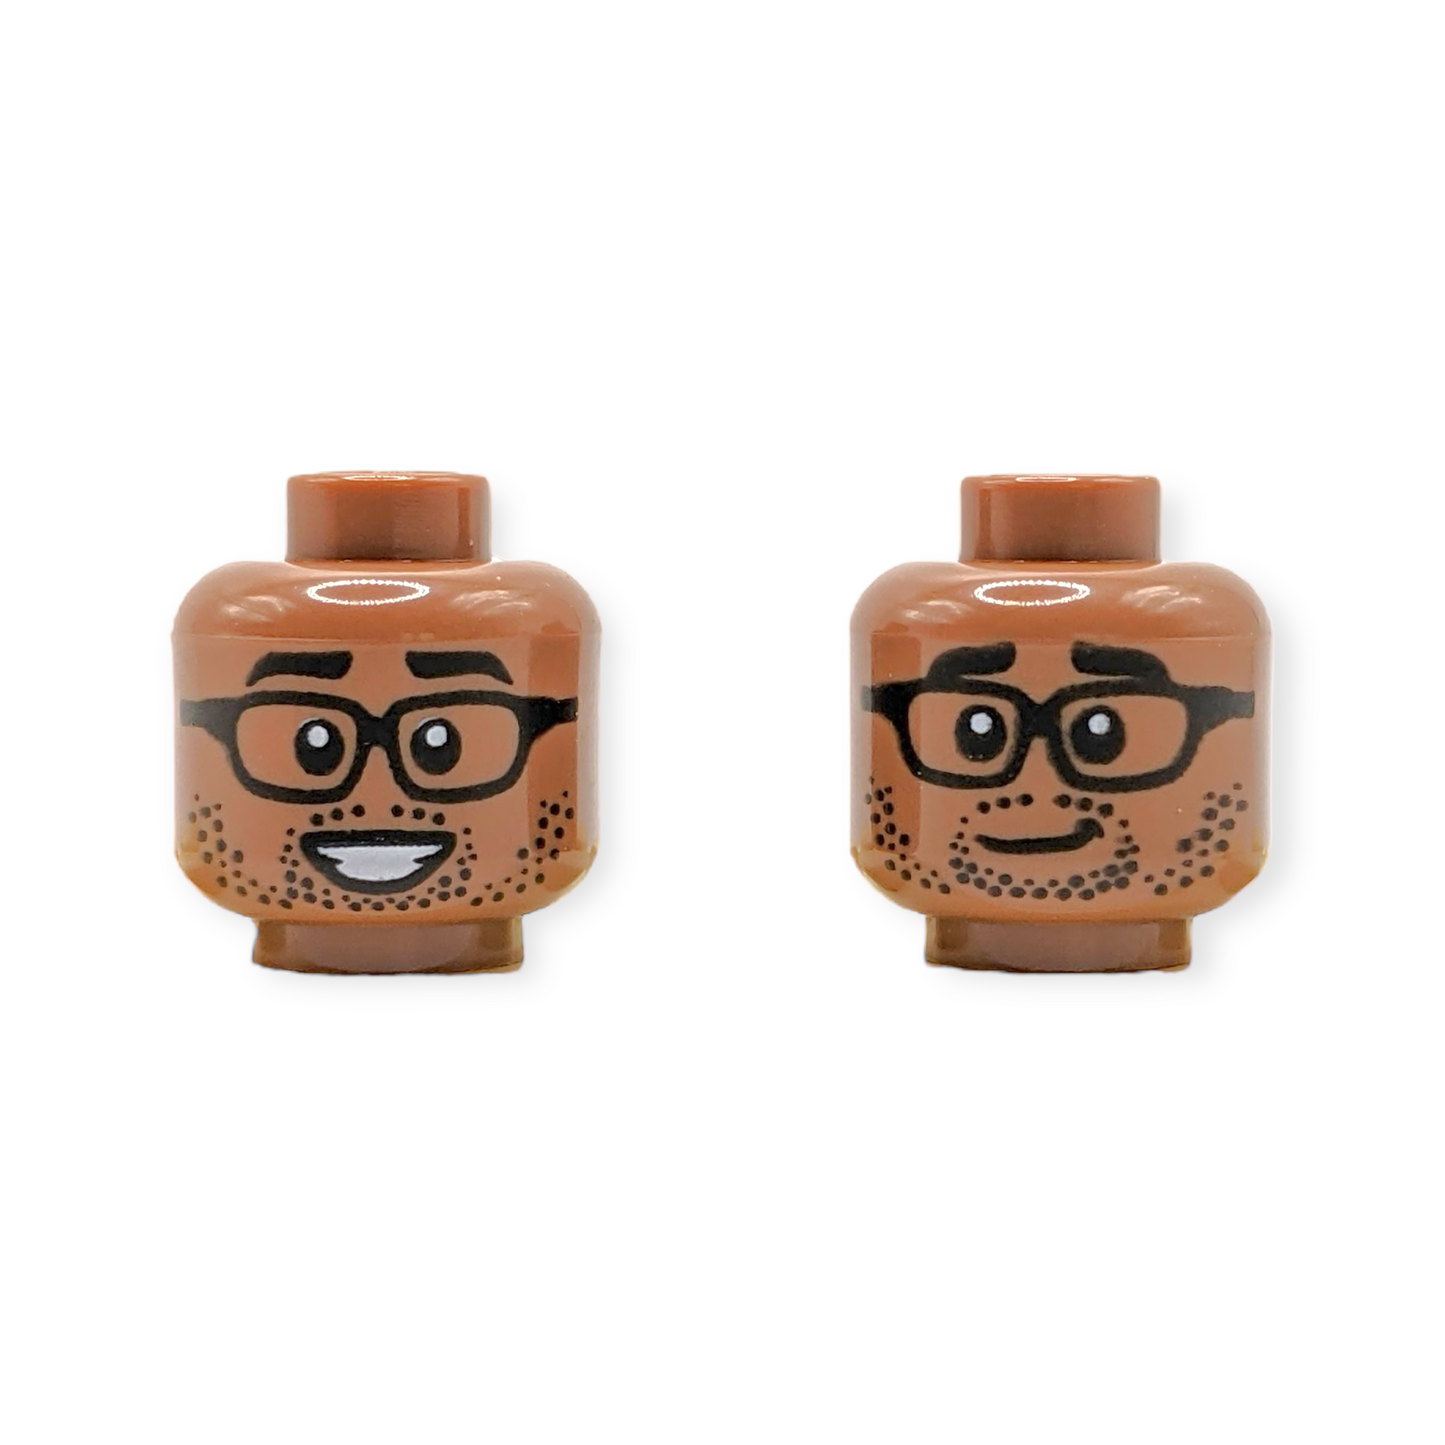 LEGO Head - 3866 Dual Sided Black Eyebrows, Glasses